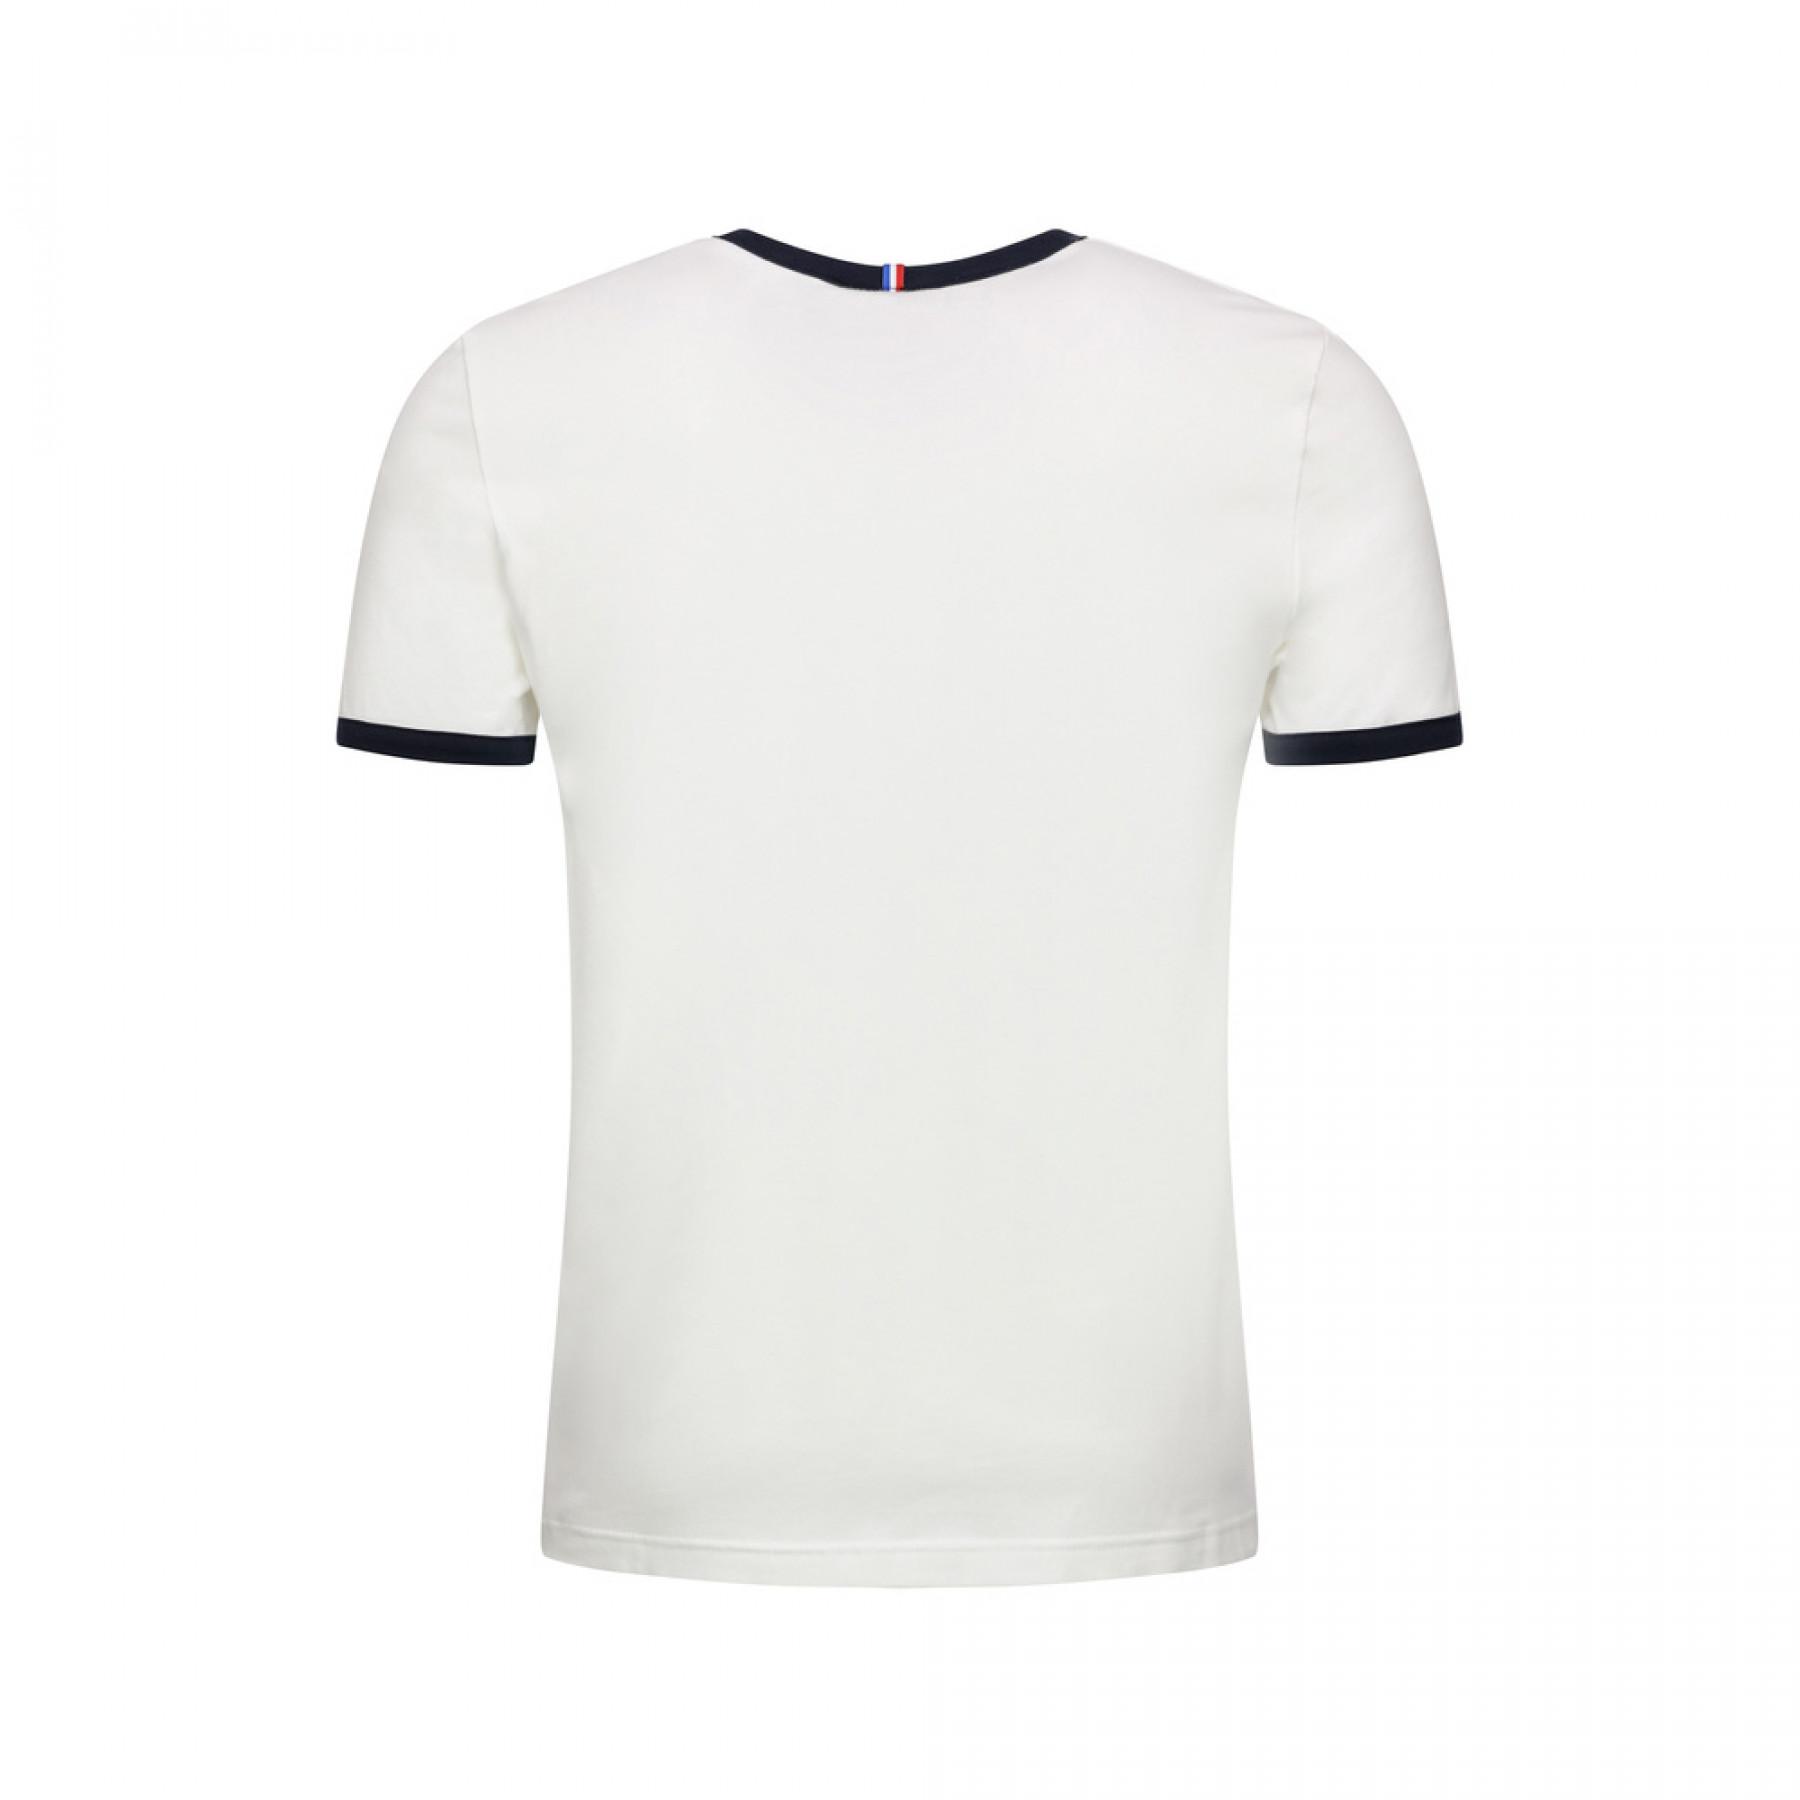 Camiseta Coq Sportif Bicolore n°1